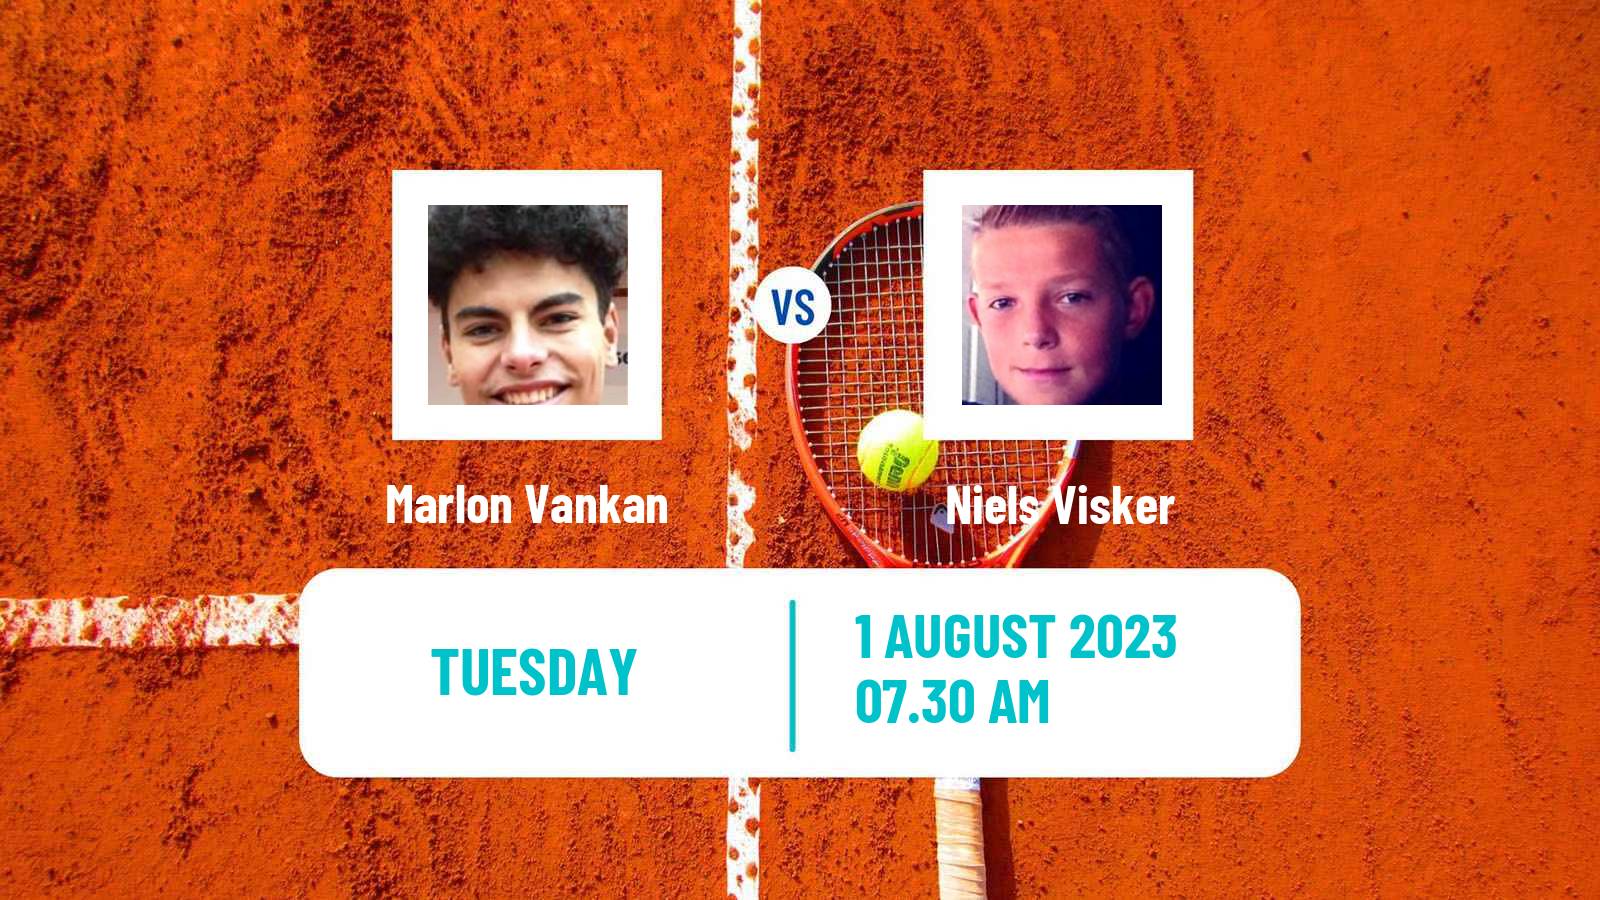 Tennis ITF M15 Eindhoven Men Marlon Vankan - Niels Visker